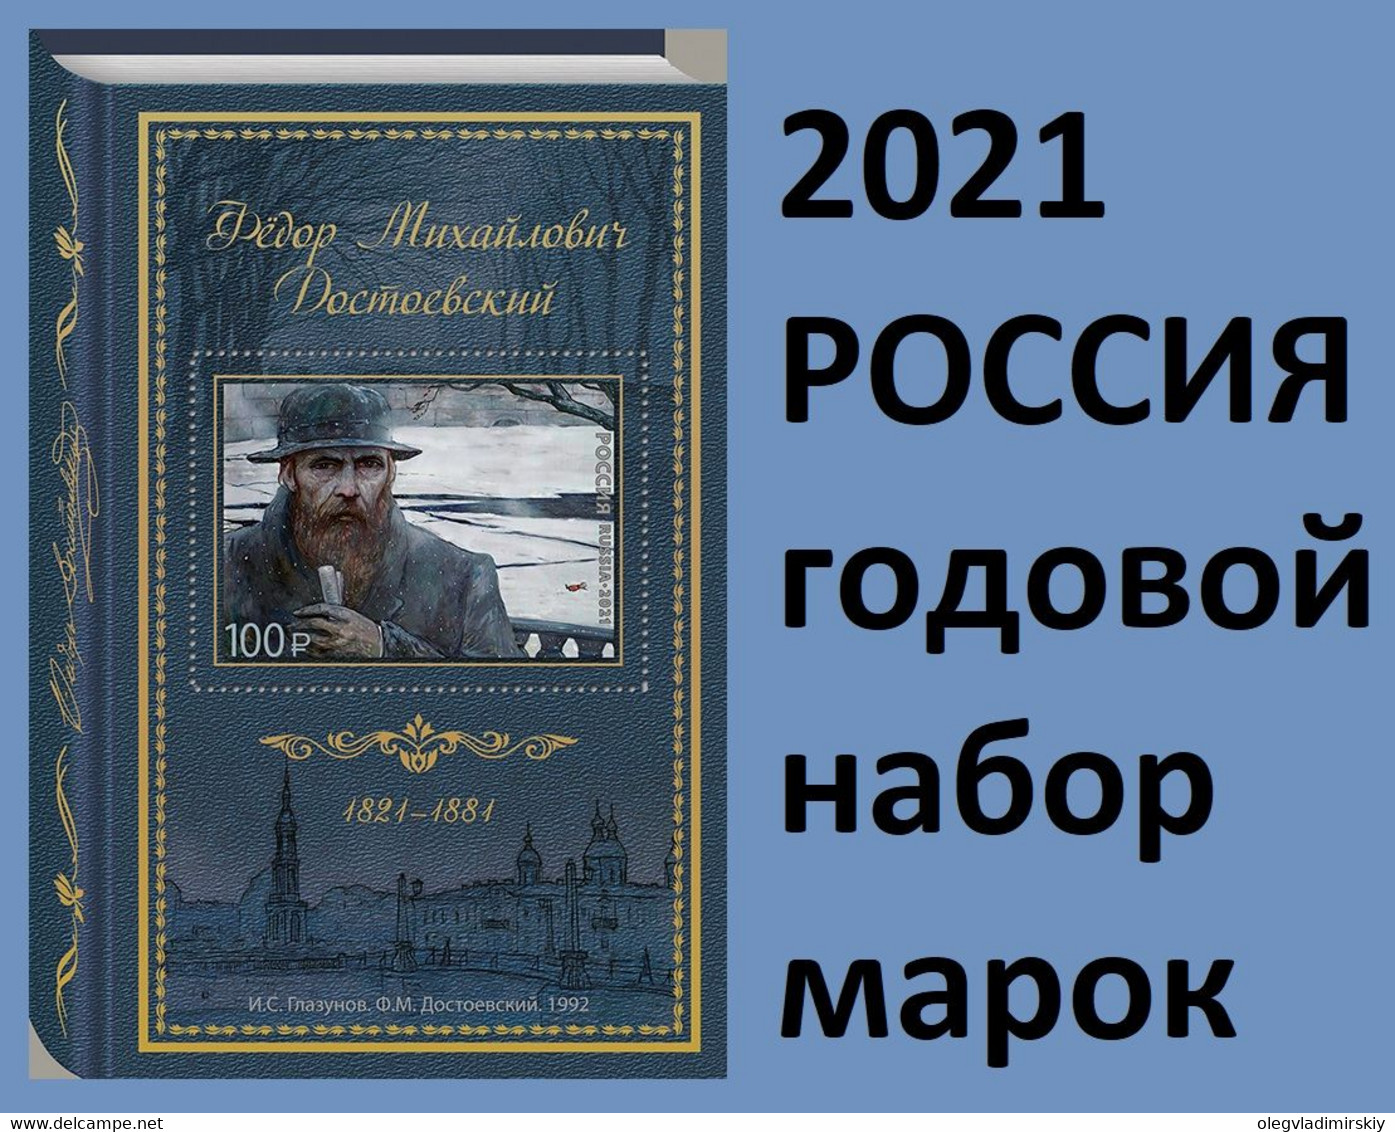 Russia 2021 Year Set Of Stamps And Block's - Volledige Jaargang